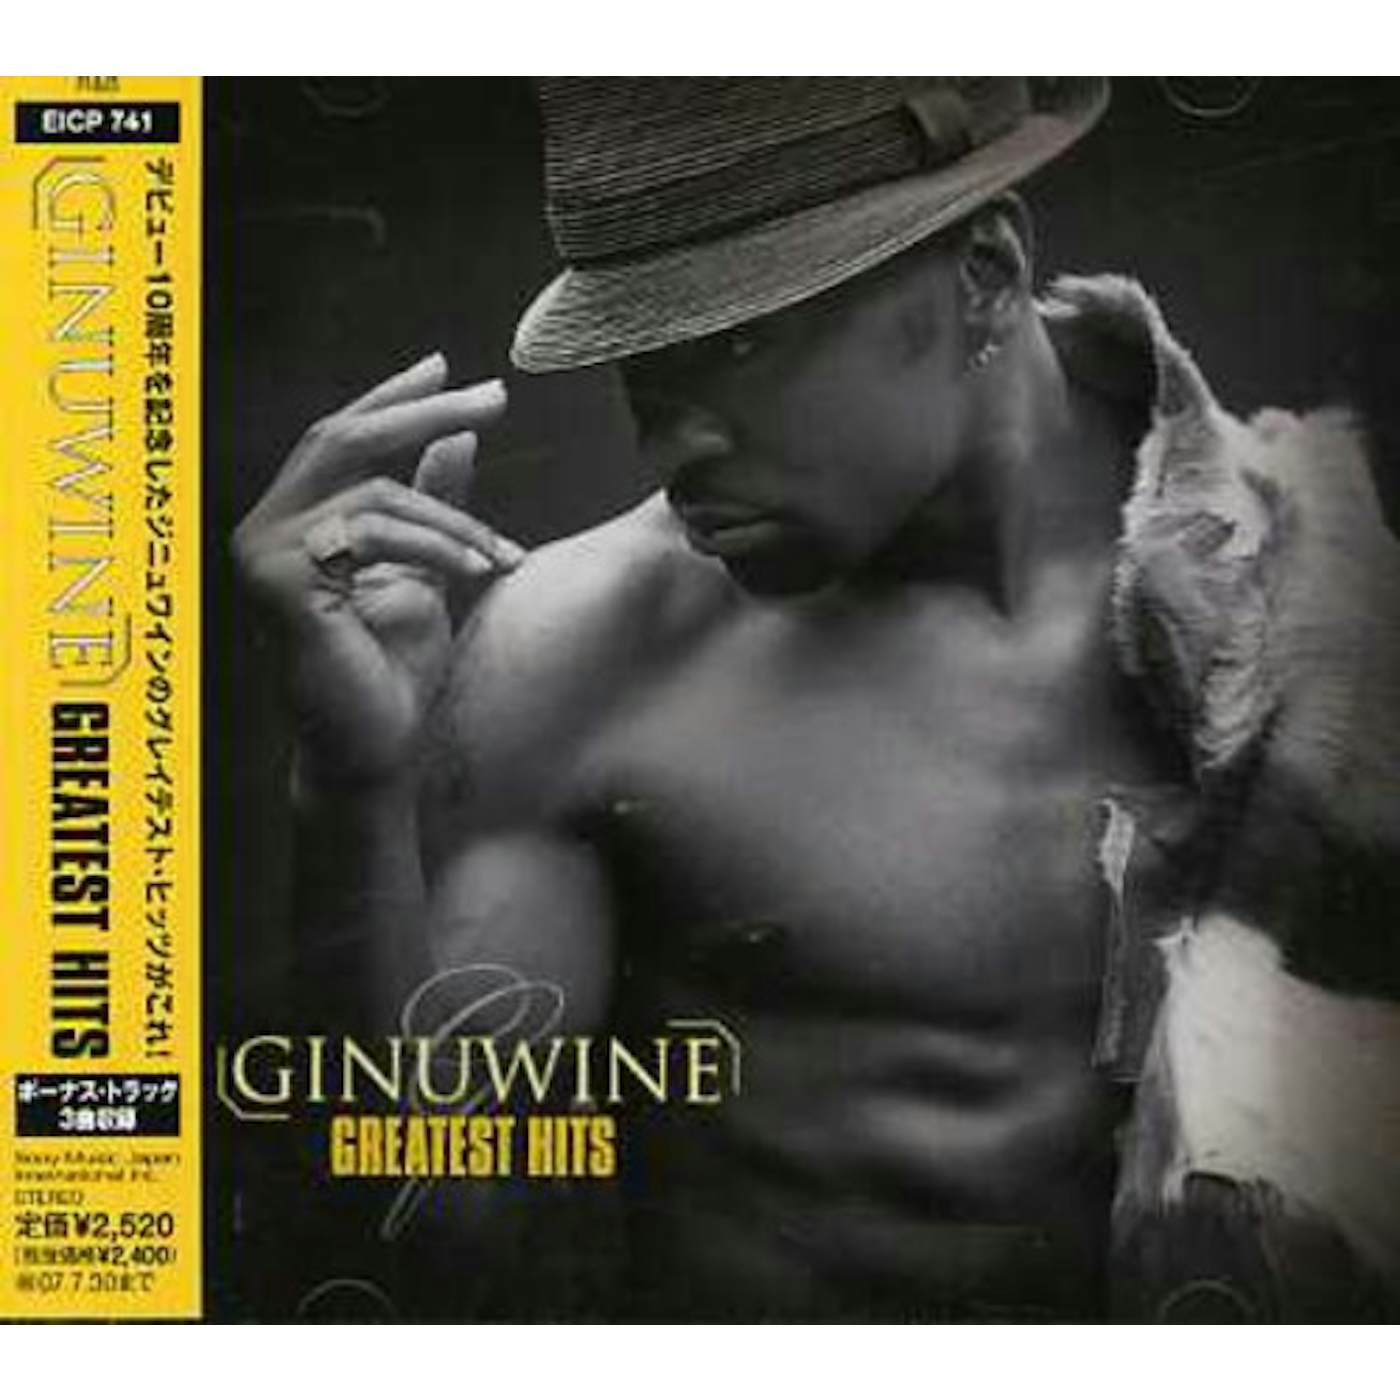 Ginuwine G.H. CD